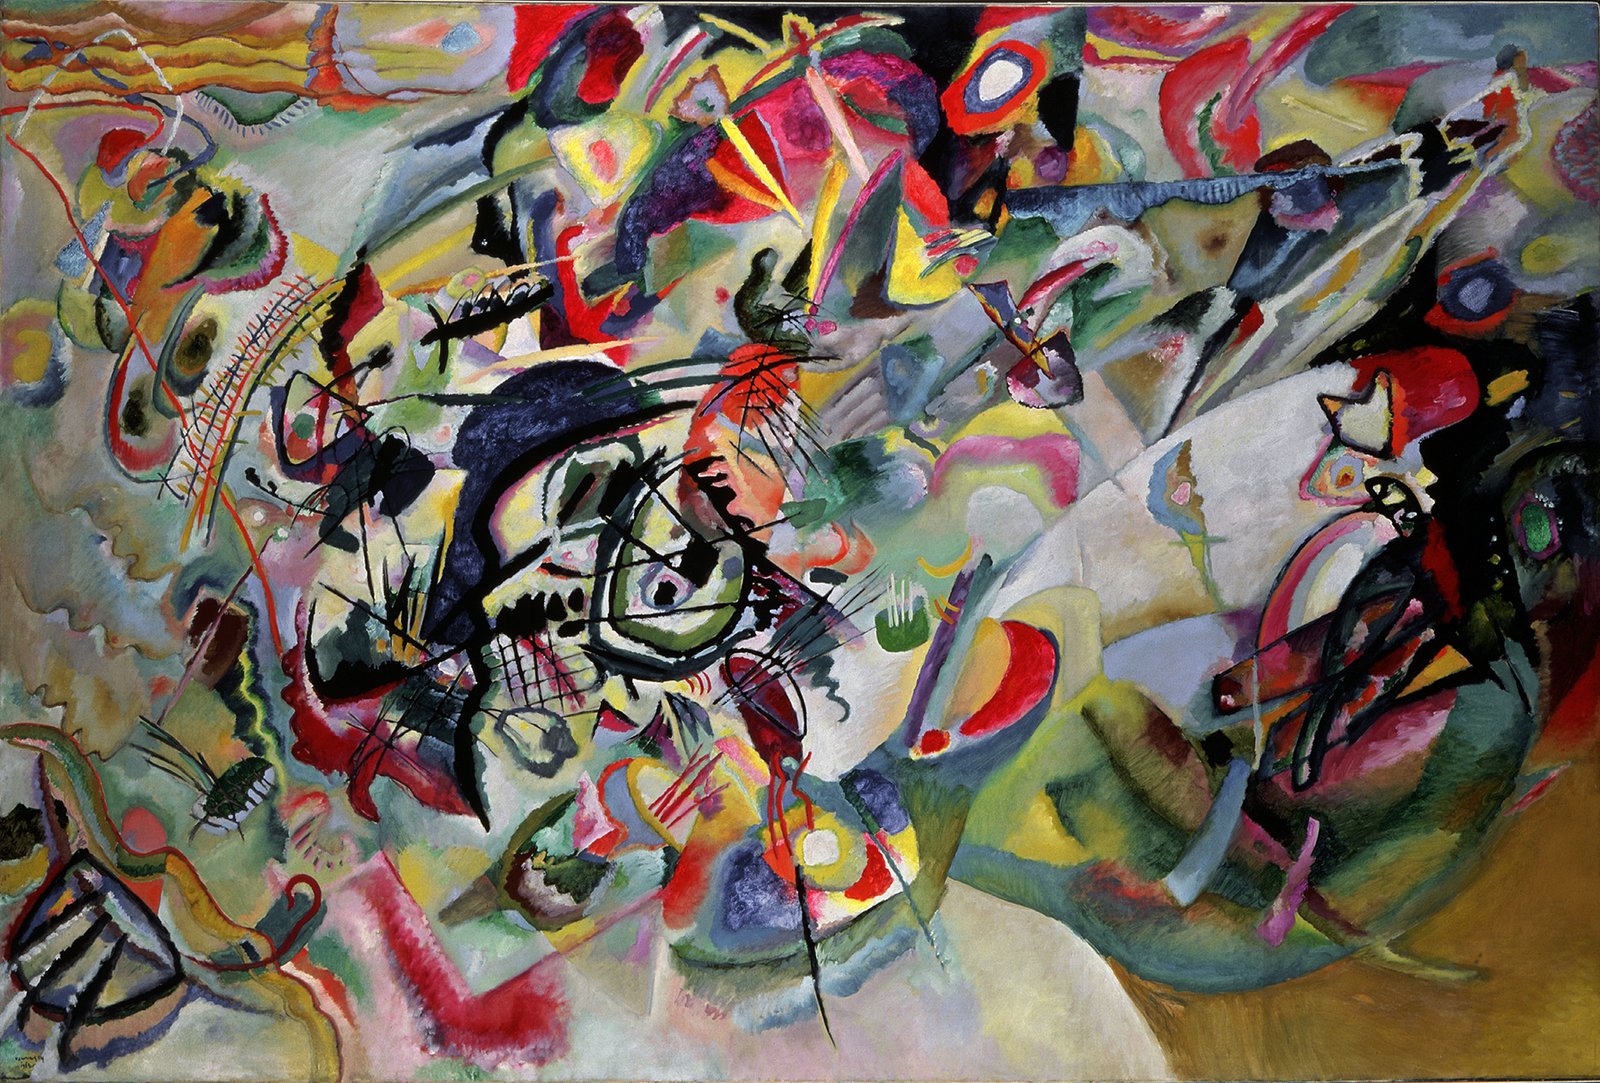 International Seminar: Who’s afraid of Kandinsky? Exhibiting Vasiliy Kandinsky in the 21st century